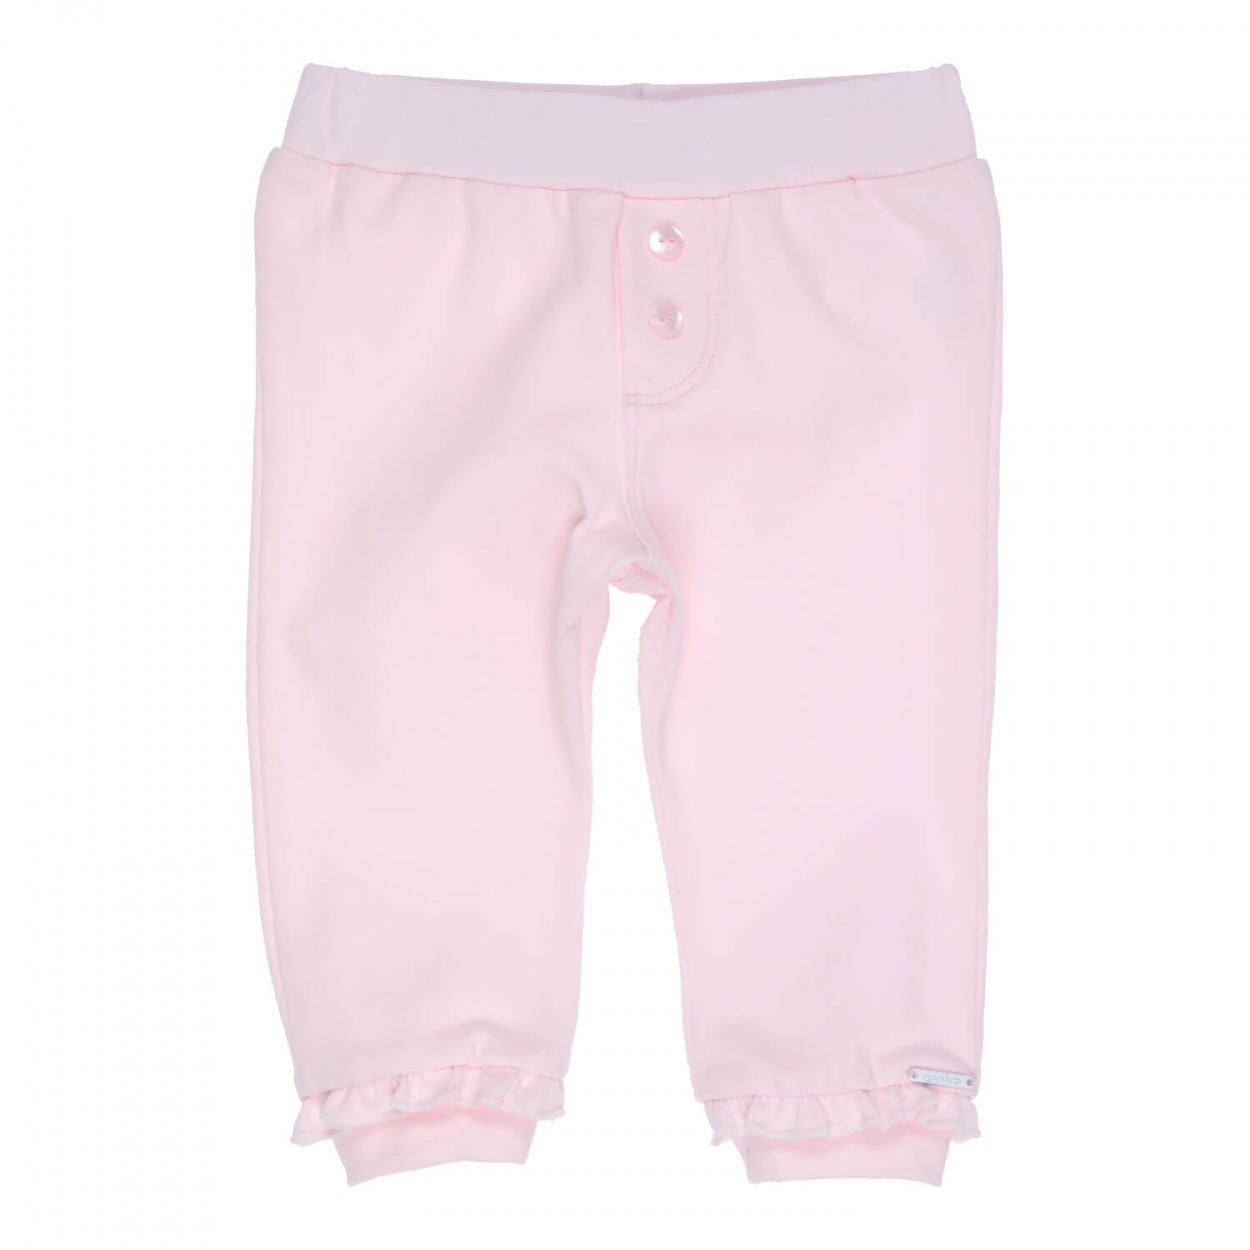 Meisjes Trousers Aerobic van Gymp in de kleur Light Pink in maat 68.